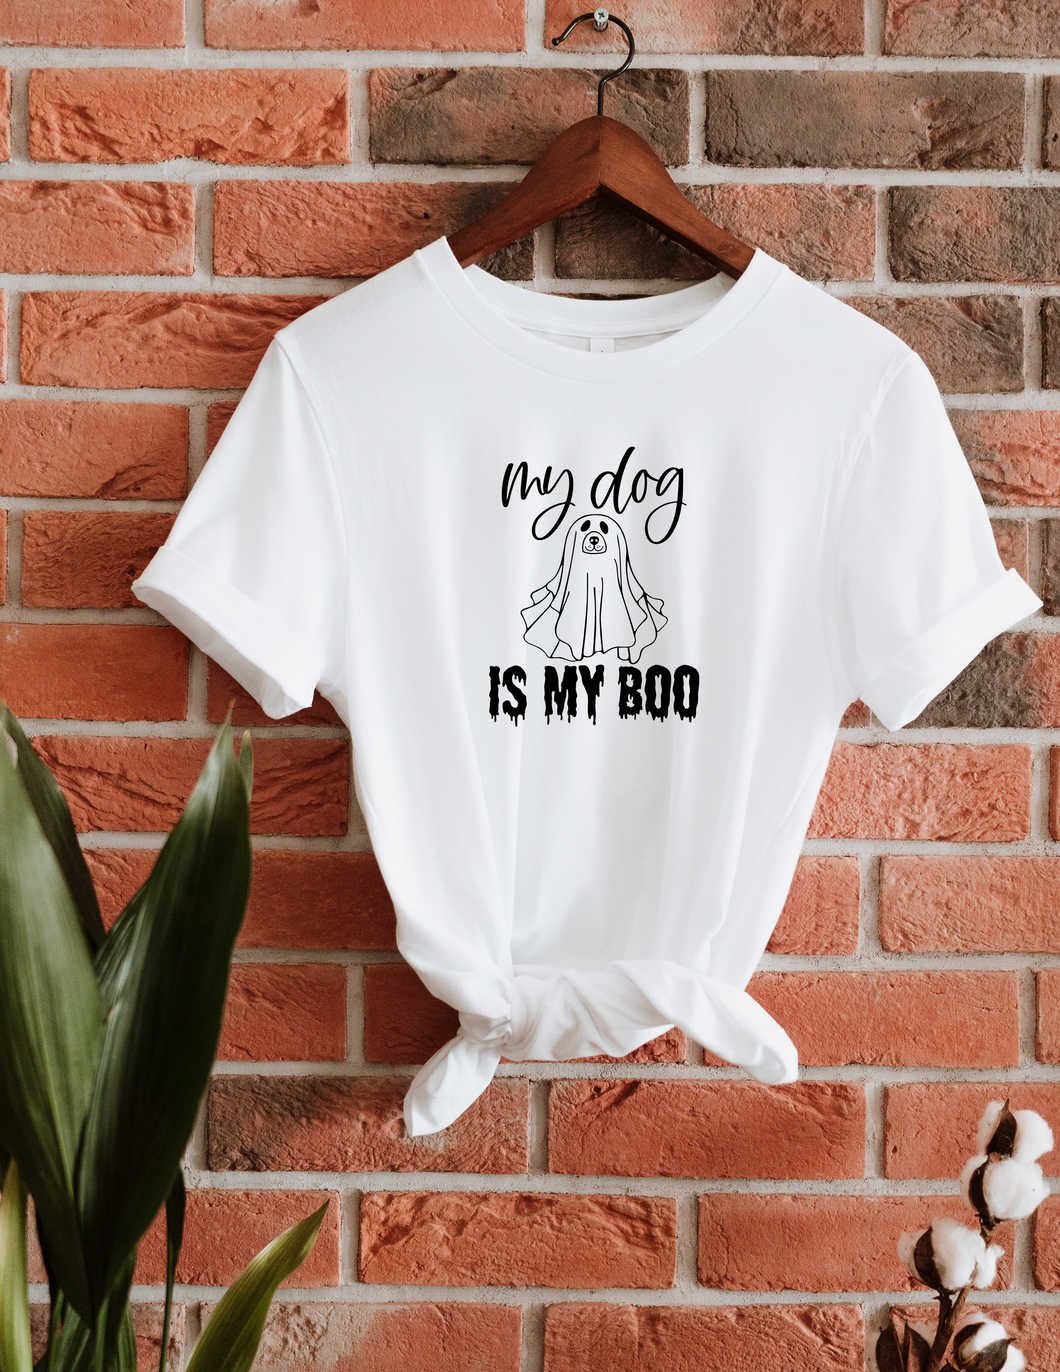 My Dog is My Boo - Halloween Shirt